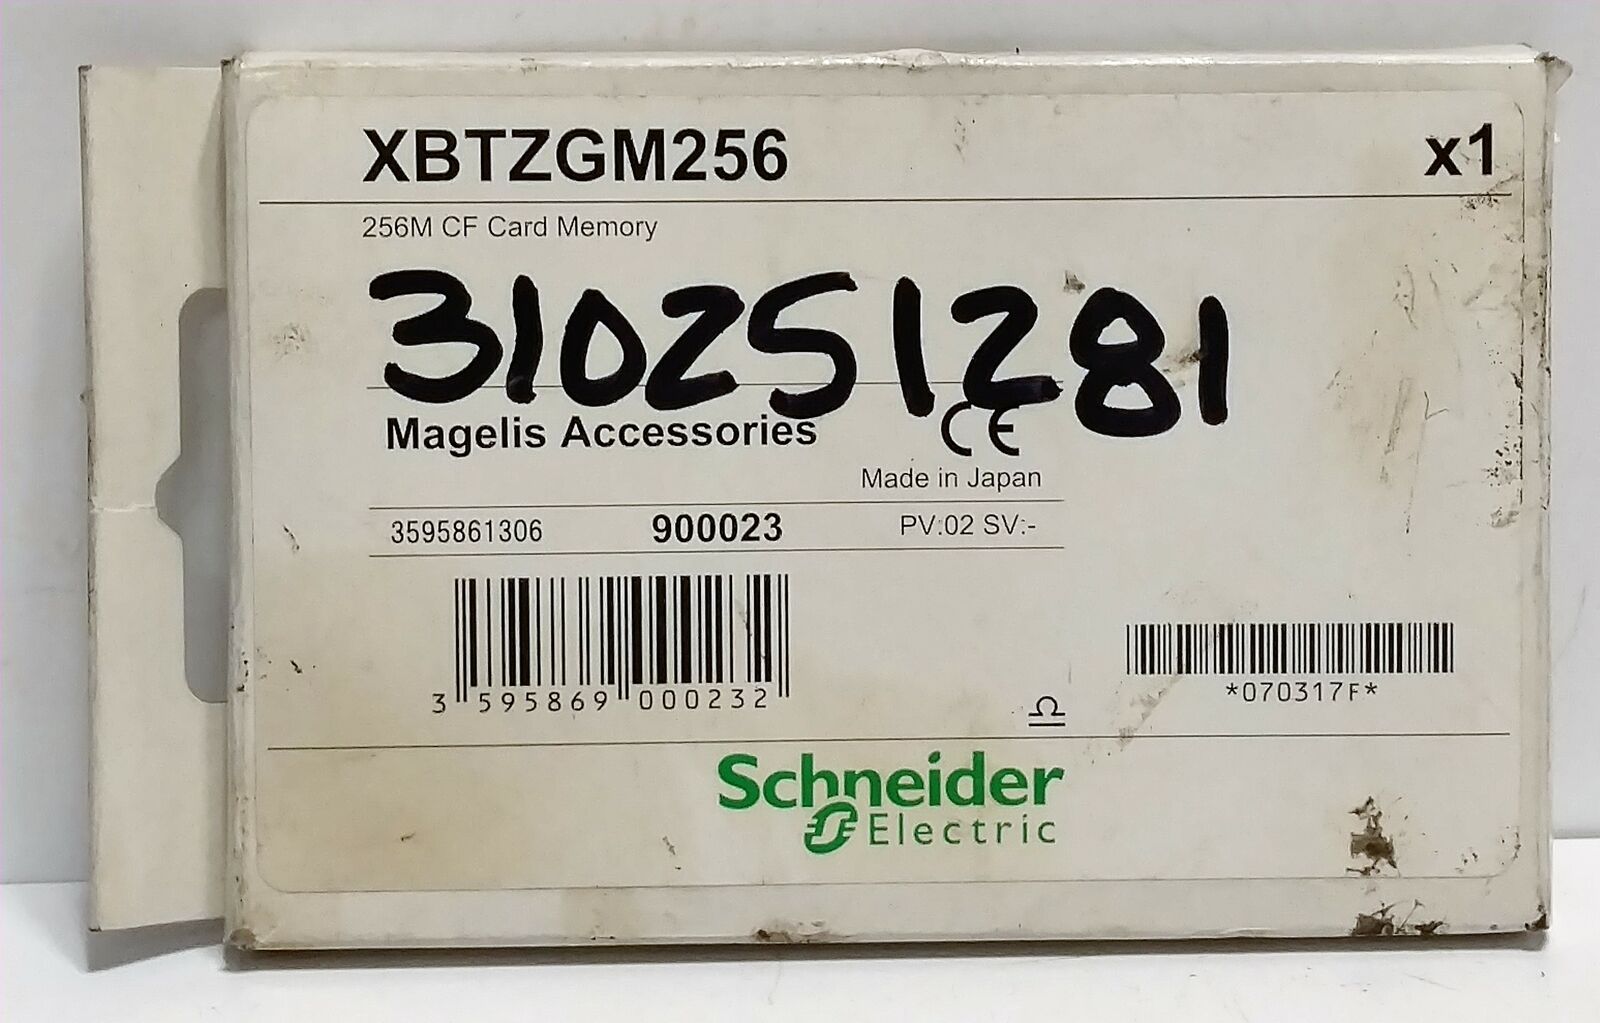 Schneider Electric XBTZGM256 256MB Compact Flash Card